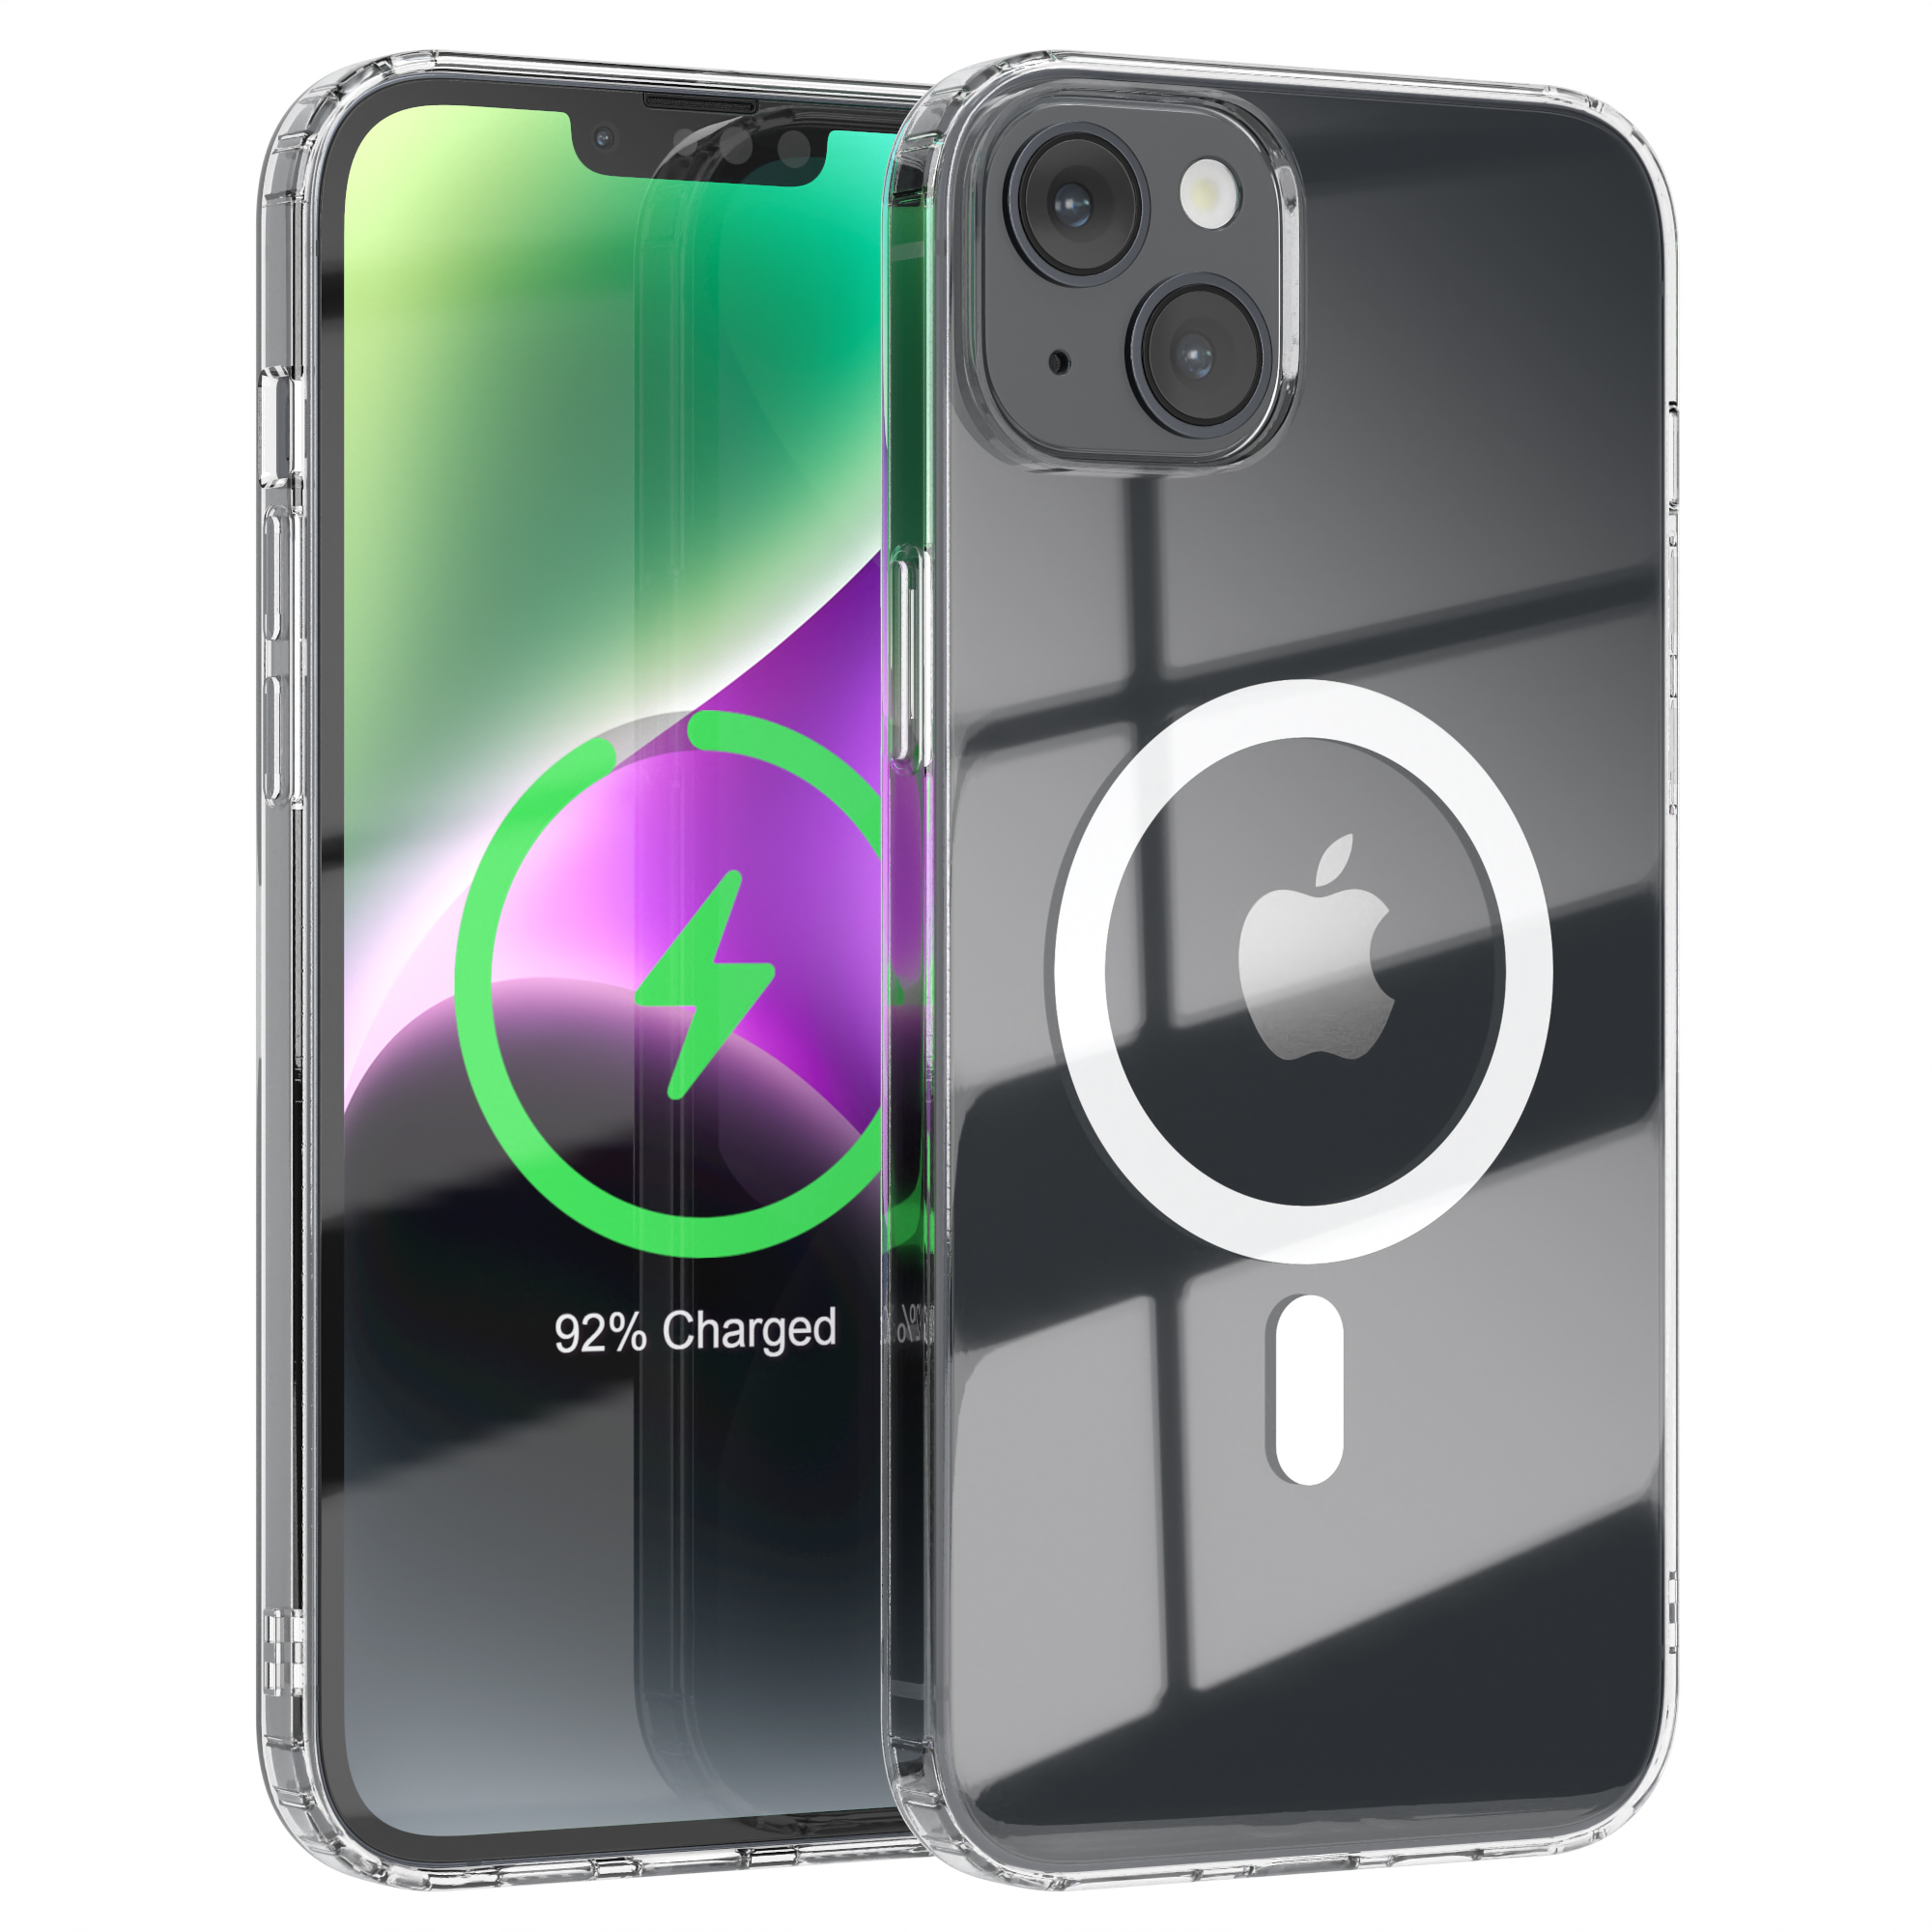 EAZY CASE Clear Cover 14 / Klar Plus, iPhone Apple, Bumper, mit Durchsichtig MagSafe